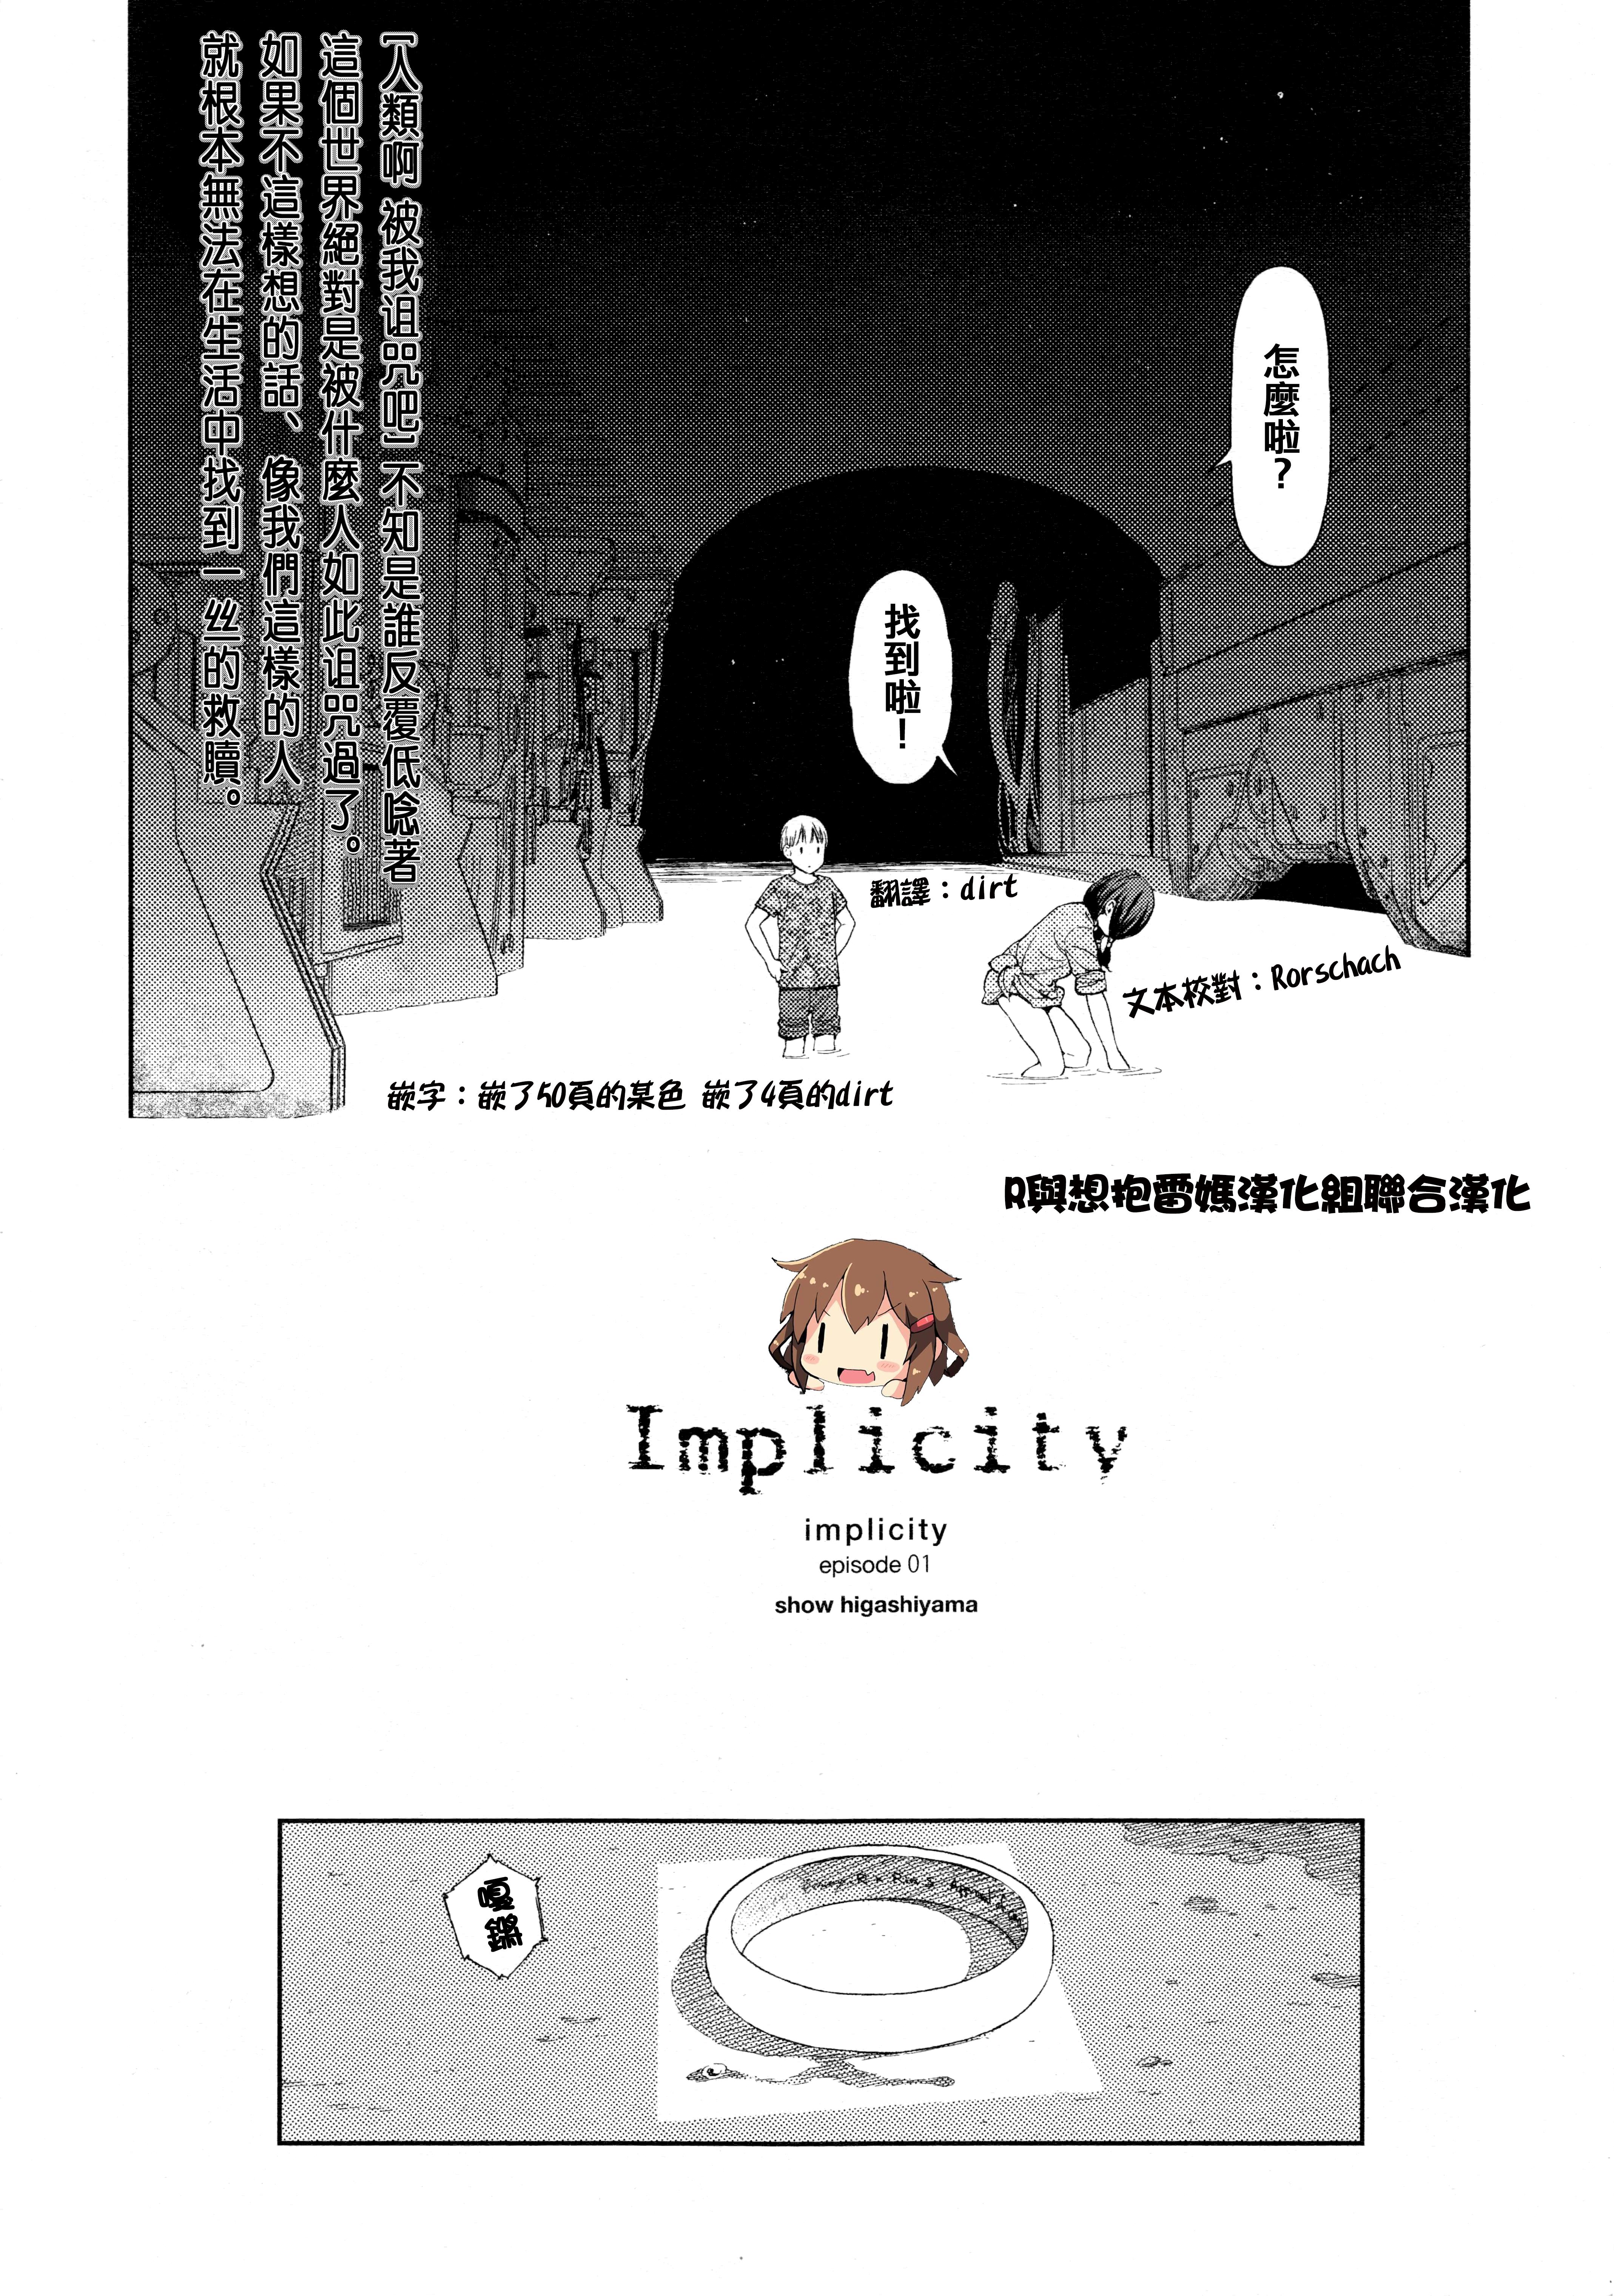 1 implicity episode Implicity (OAV)